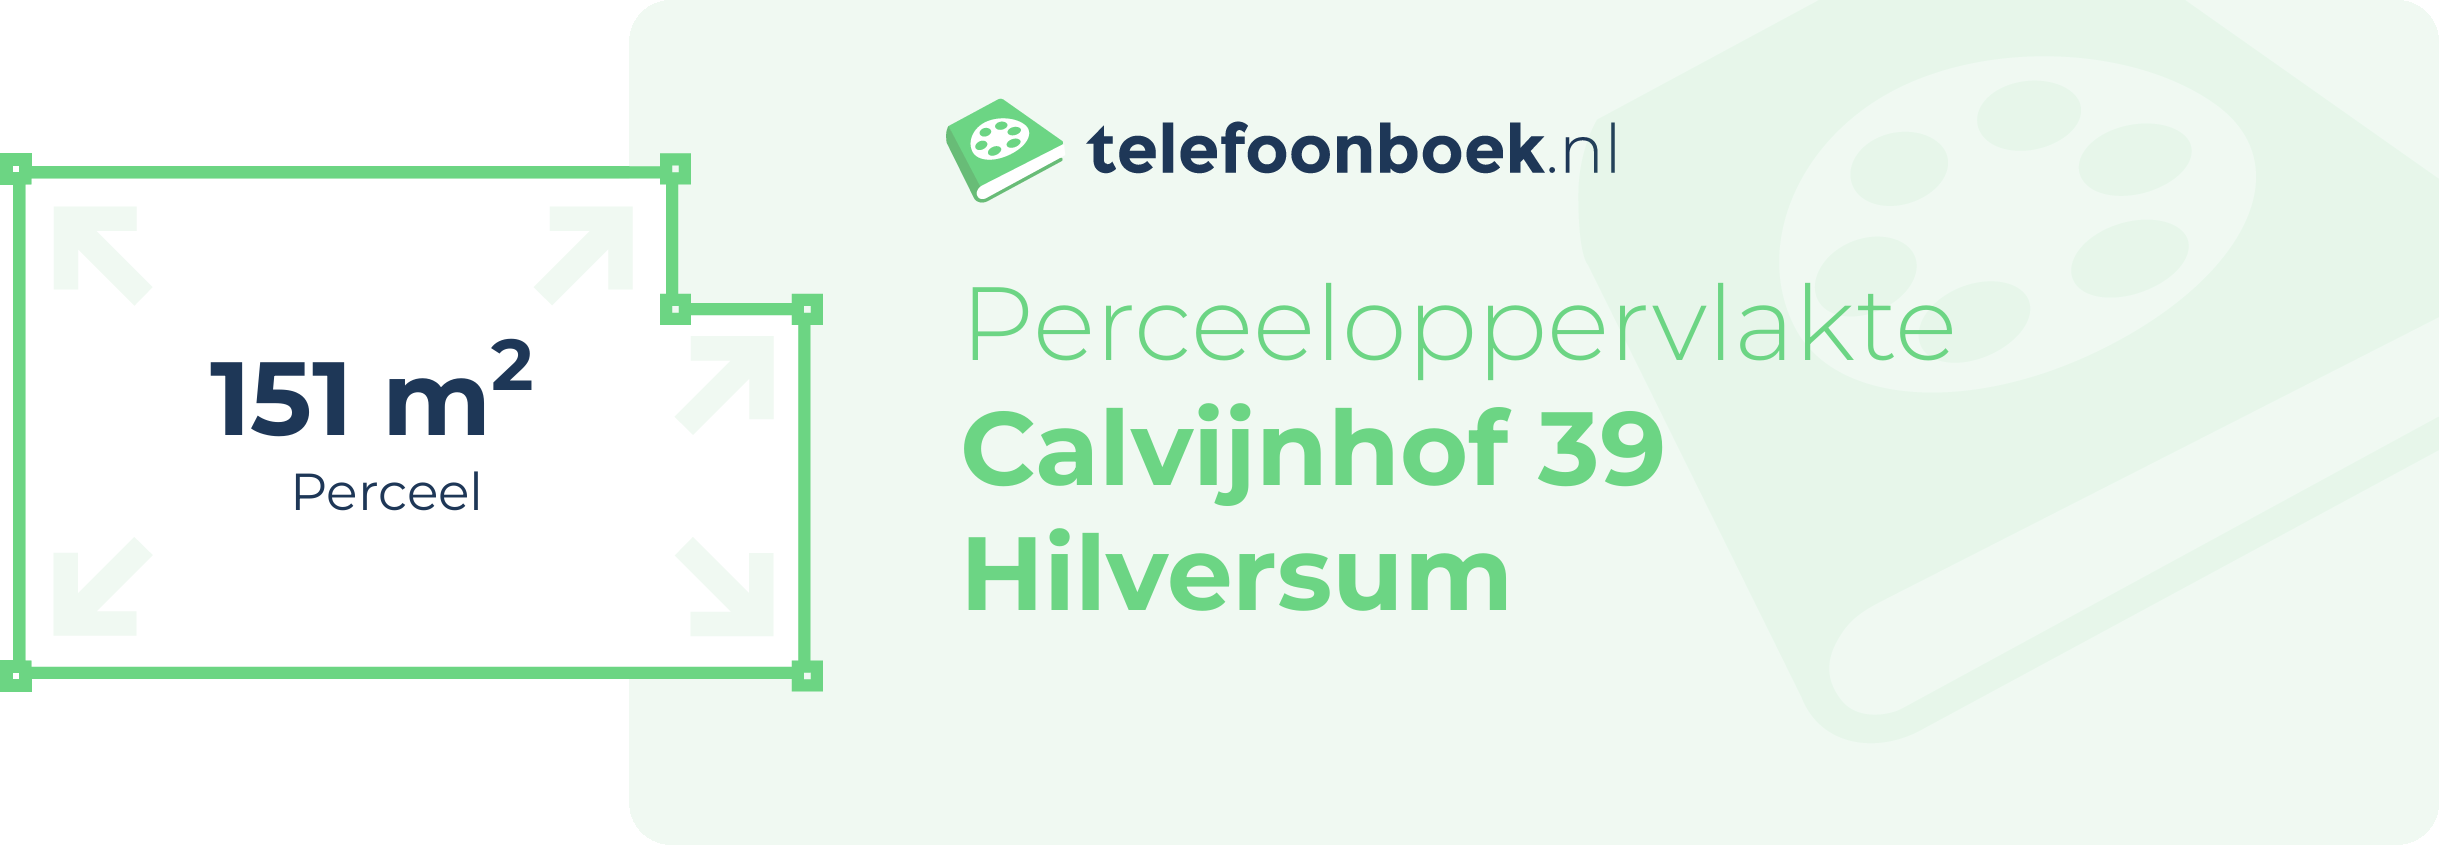 Perceeloppervlakte Calvijnhof 39 Hilversum